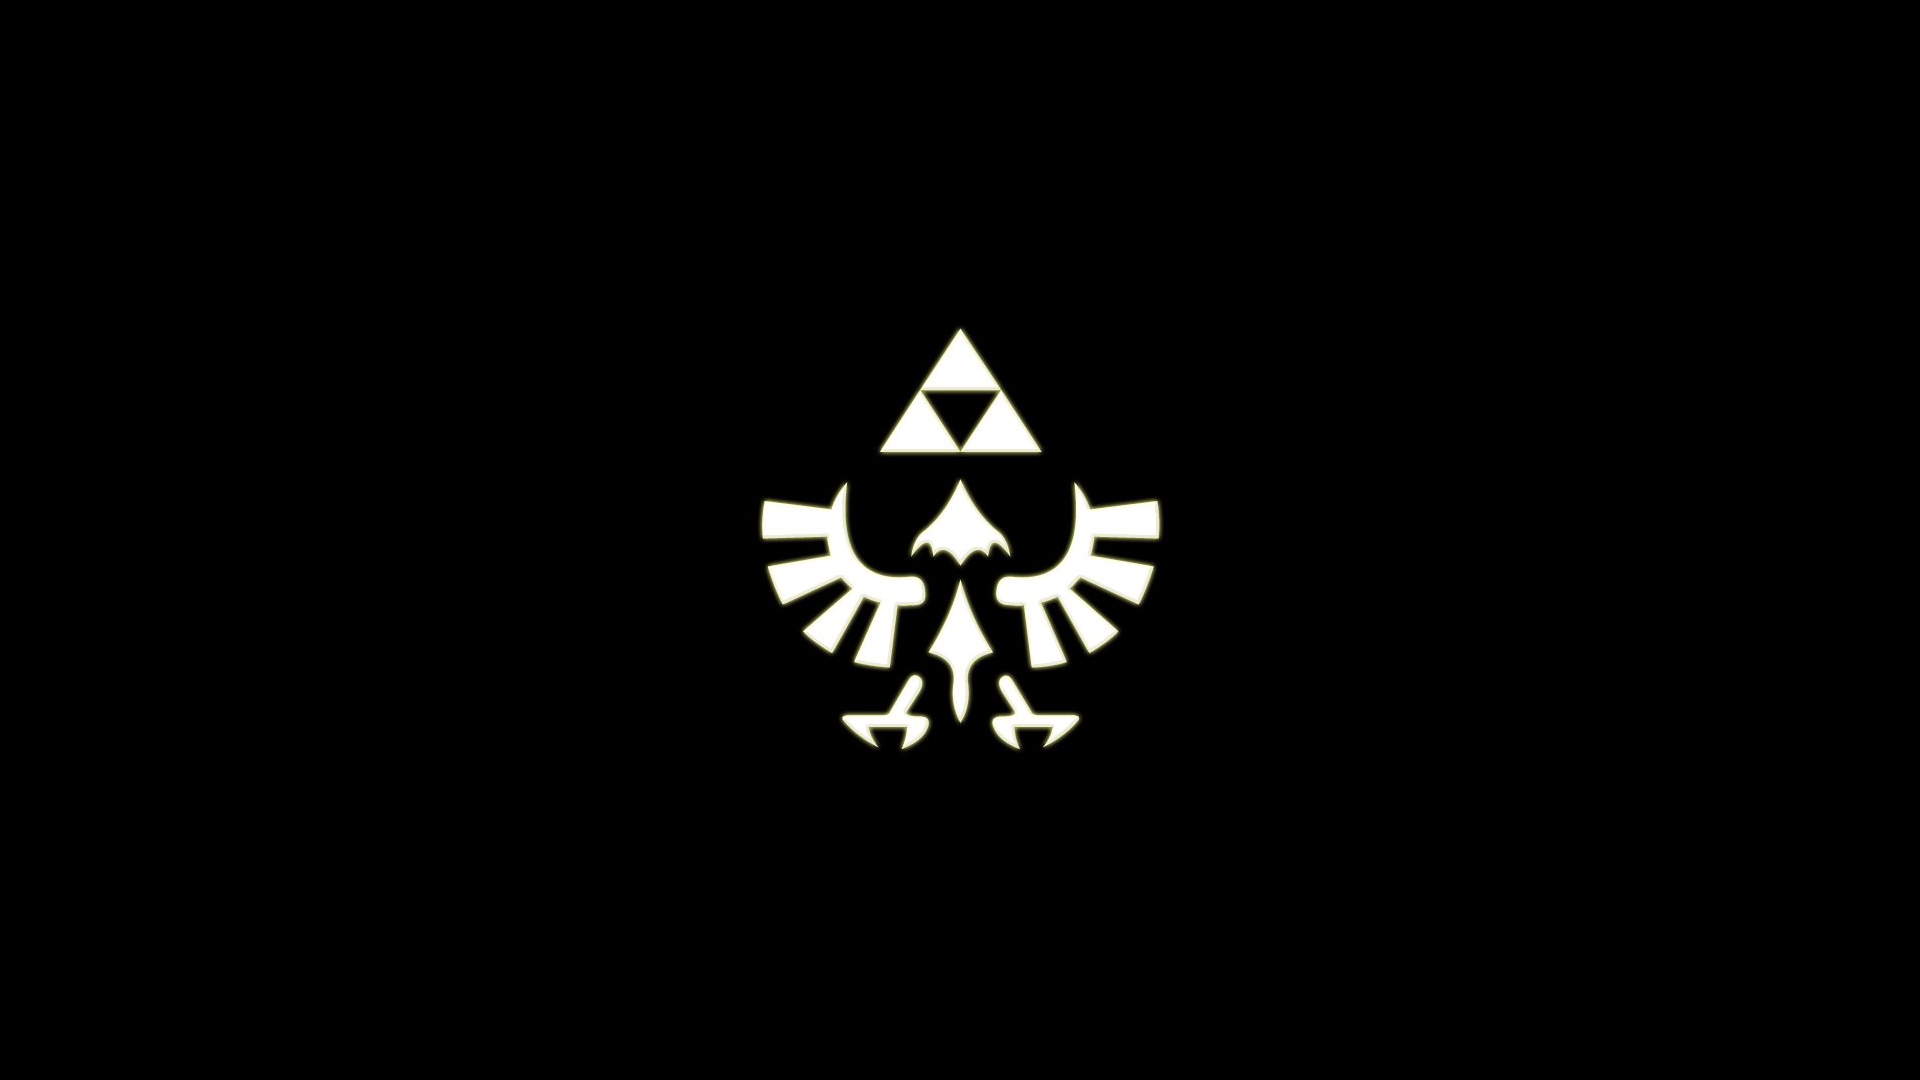 Legend Of Zelda Triforce Symbol Wallpaper The